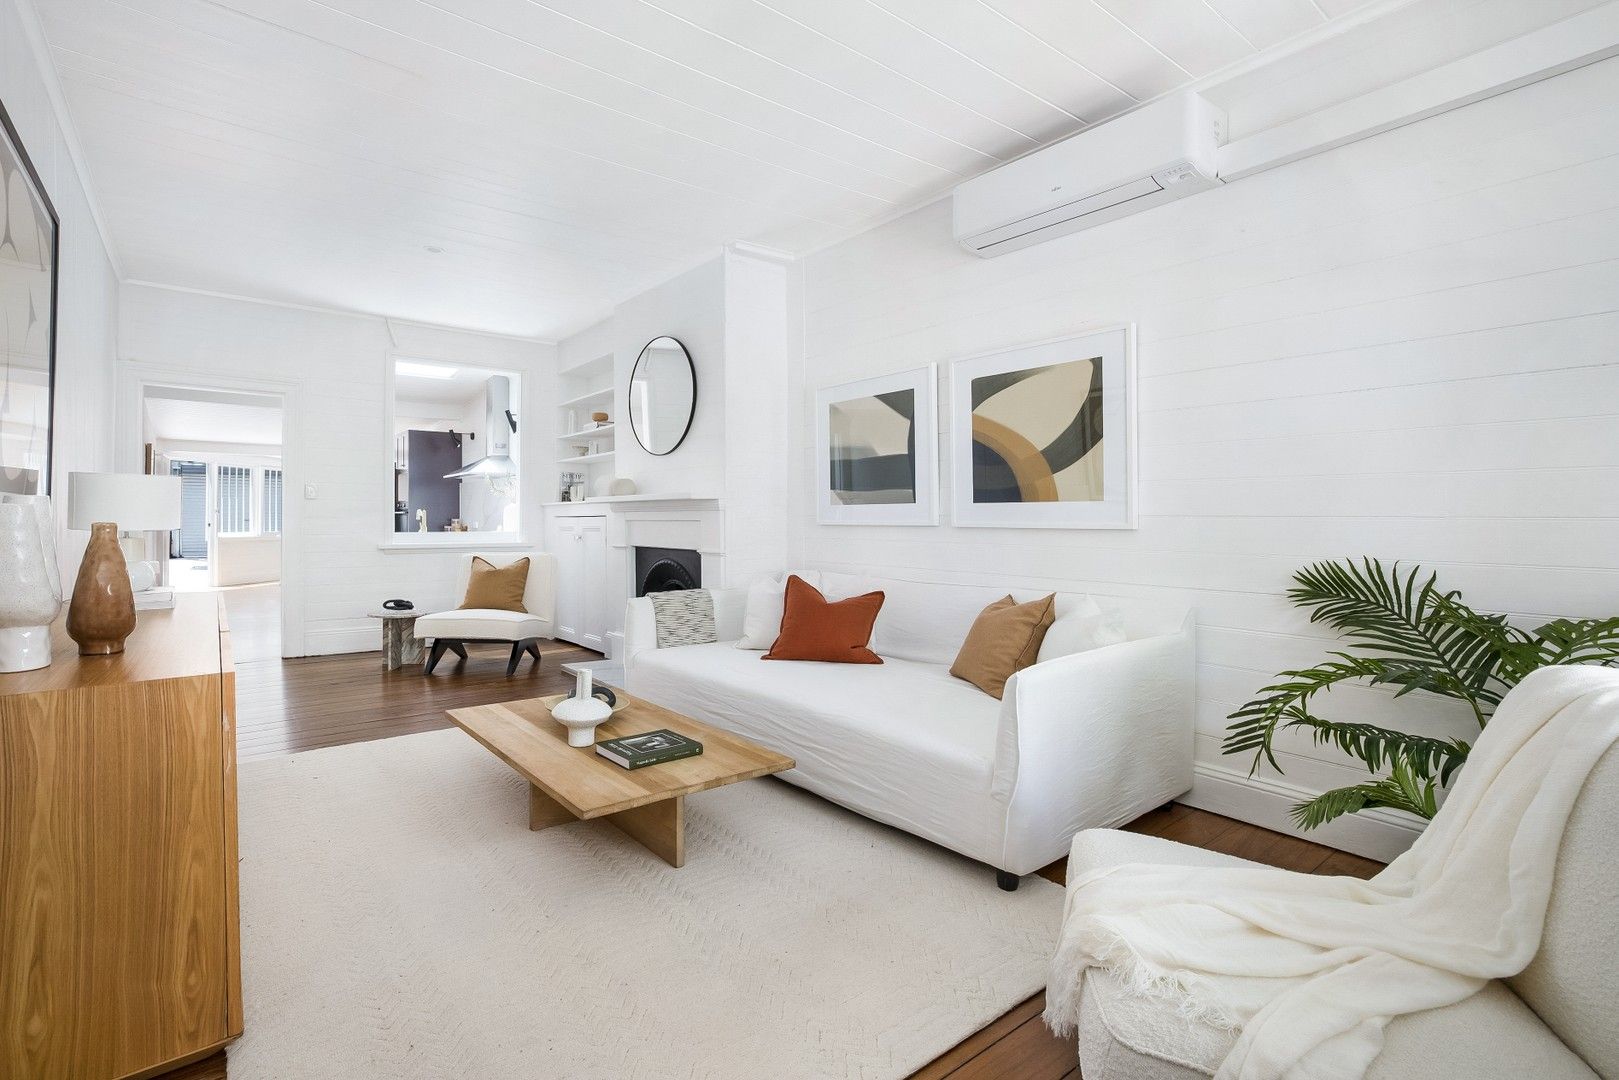 3 bedrooms House in 4 Alexander Street PADDINGTON NSW, 2021